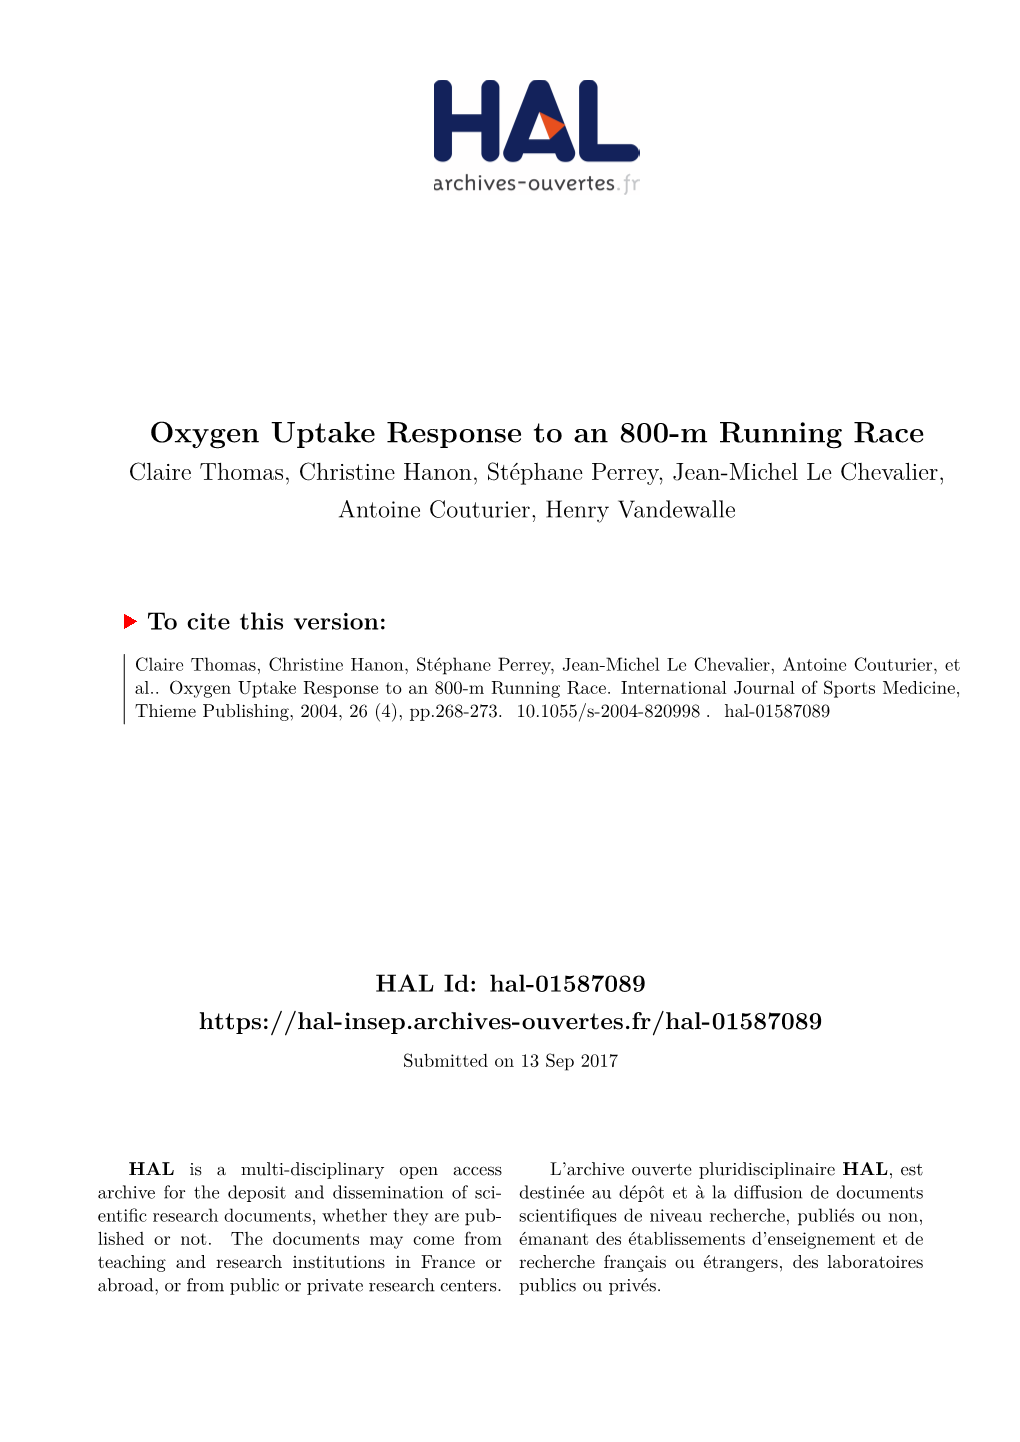 Oxygen Uptake Response to an 800-M Running Race Claire Thomas, Christine Hanon, Stéphane Perrey, Jean-Michel Le Chevalier, Antoine Couturier, Henry Vandewalle